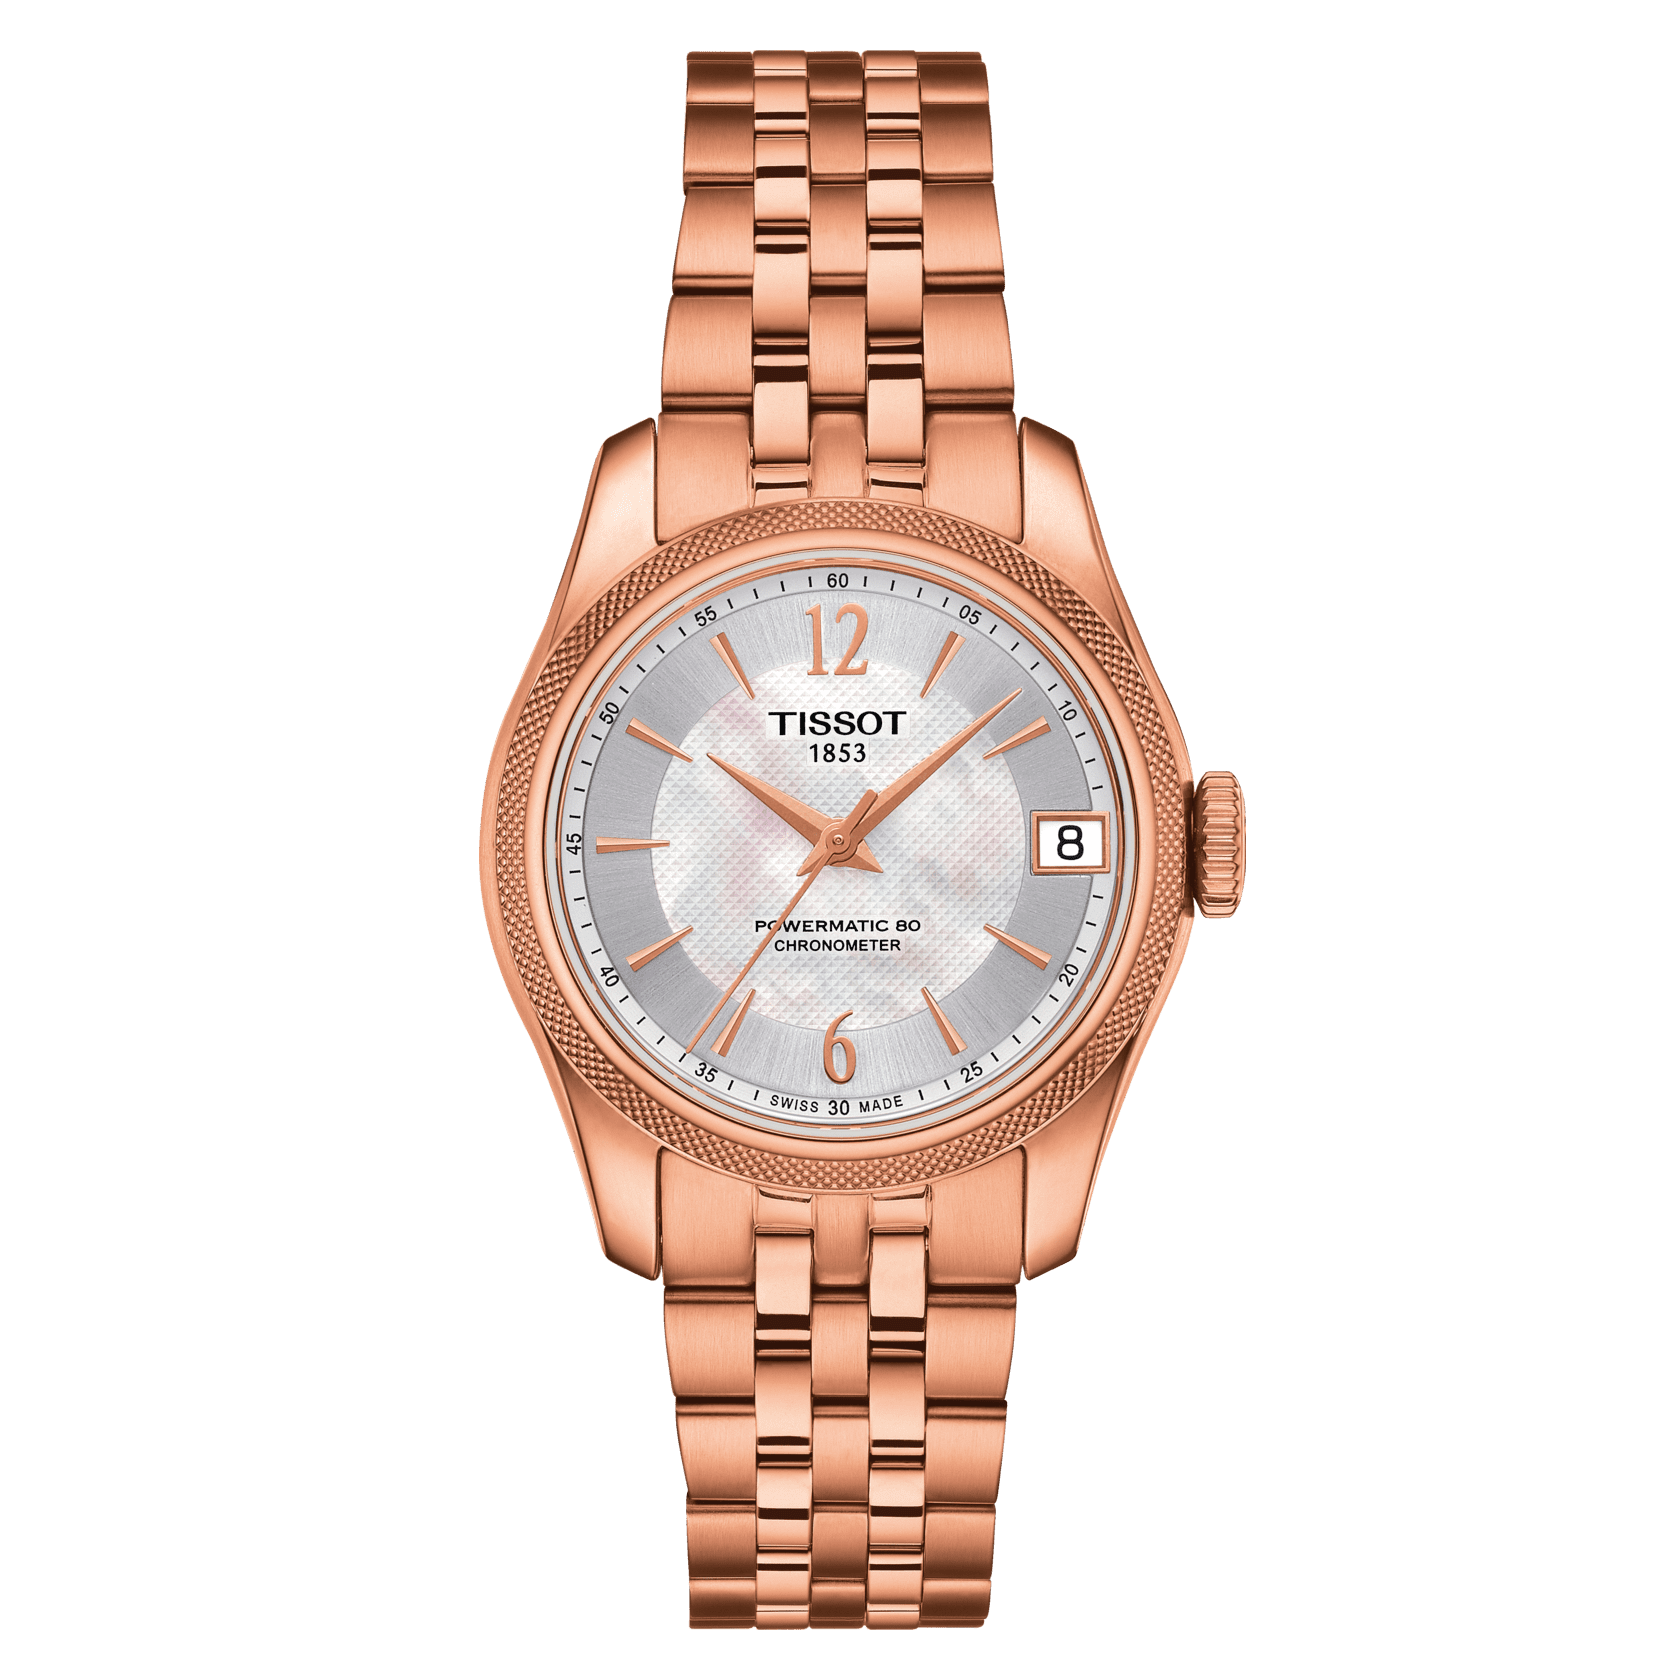 Best Replica Luxury Watches